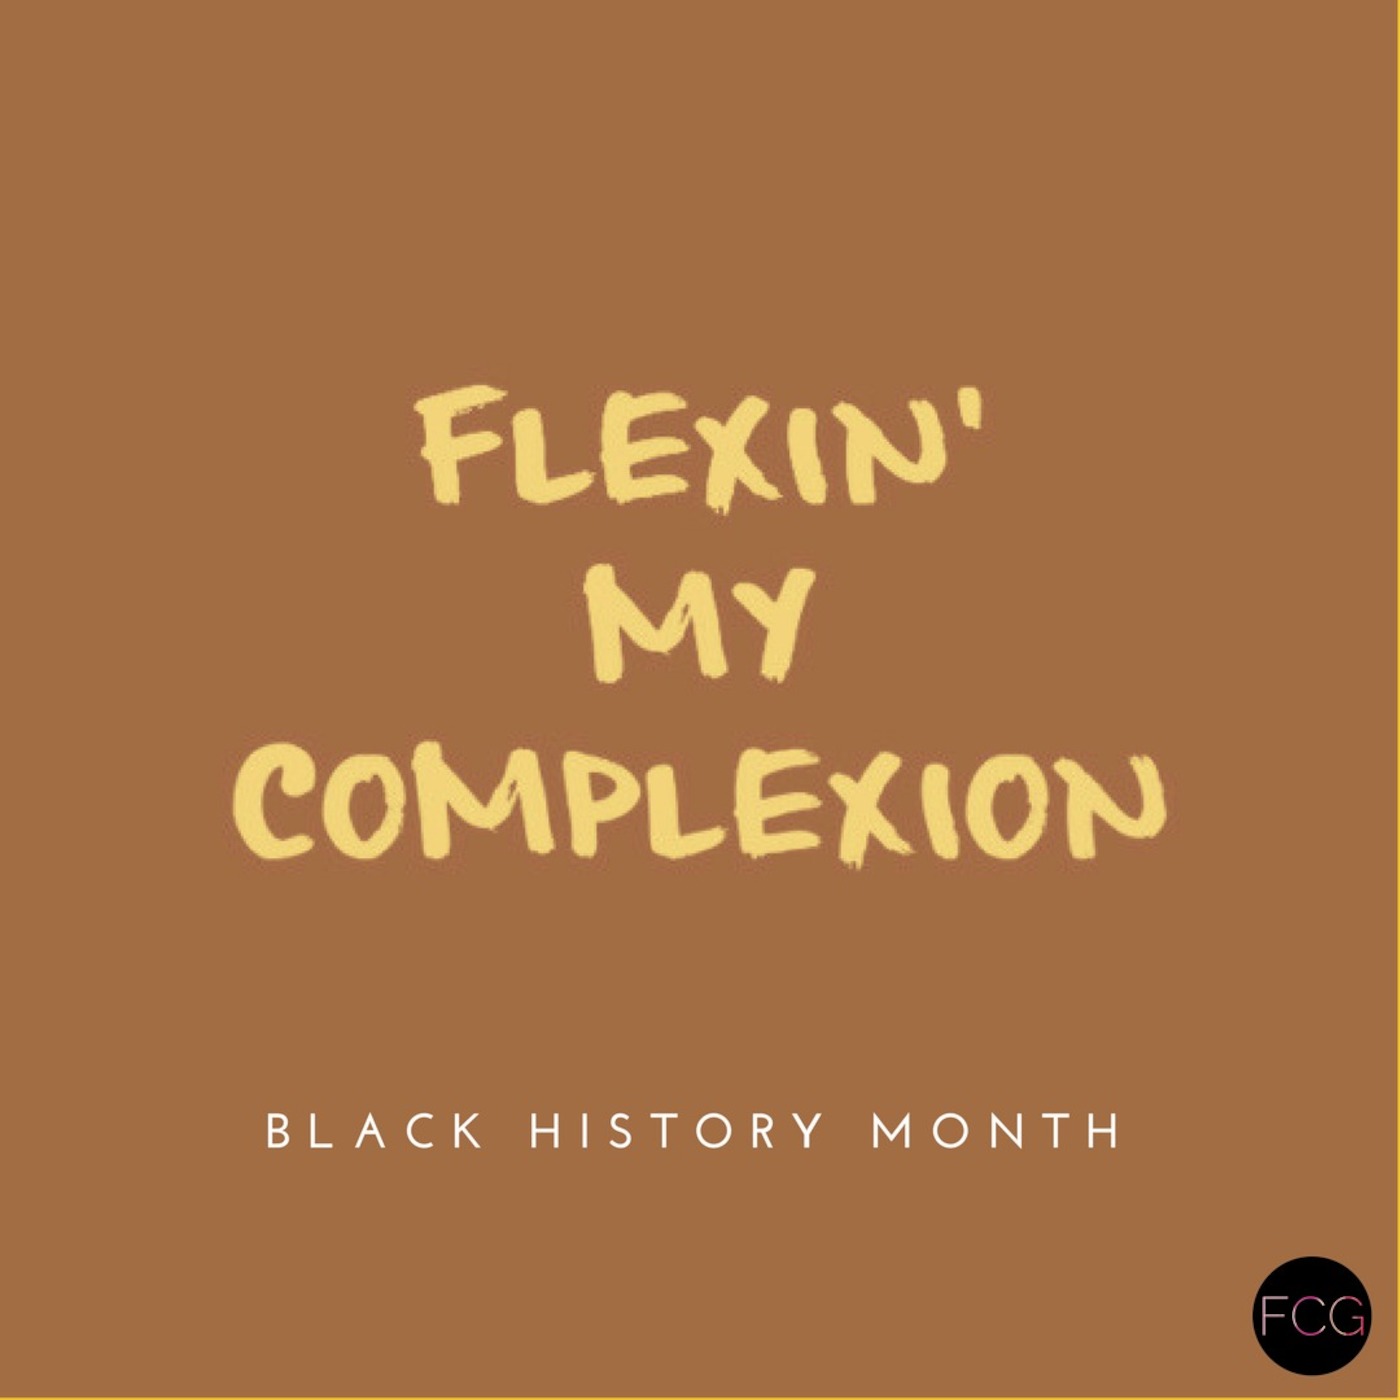 Flexin’ my complexion